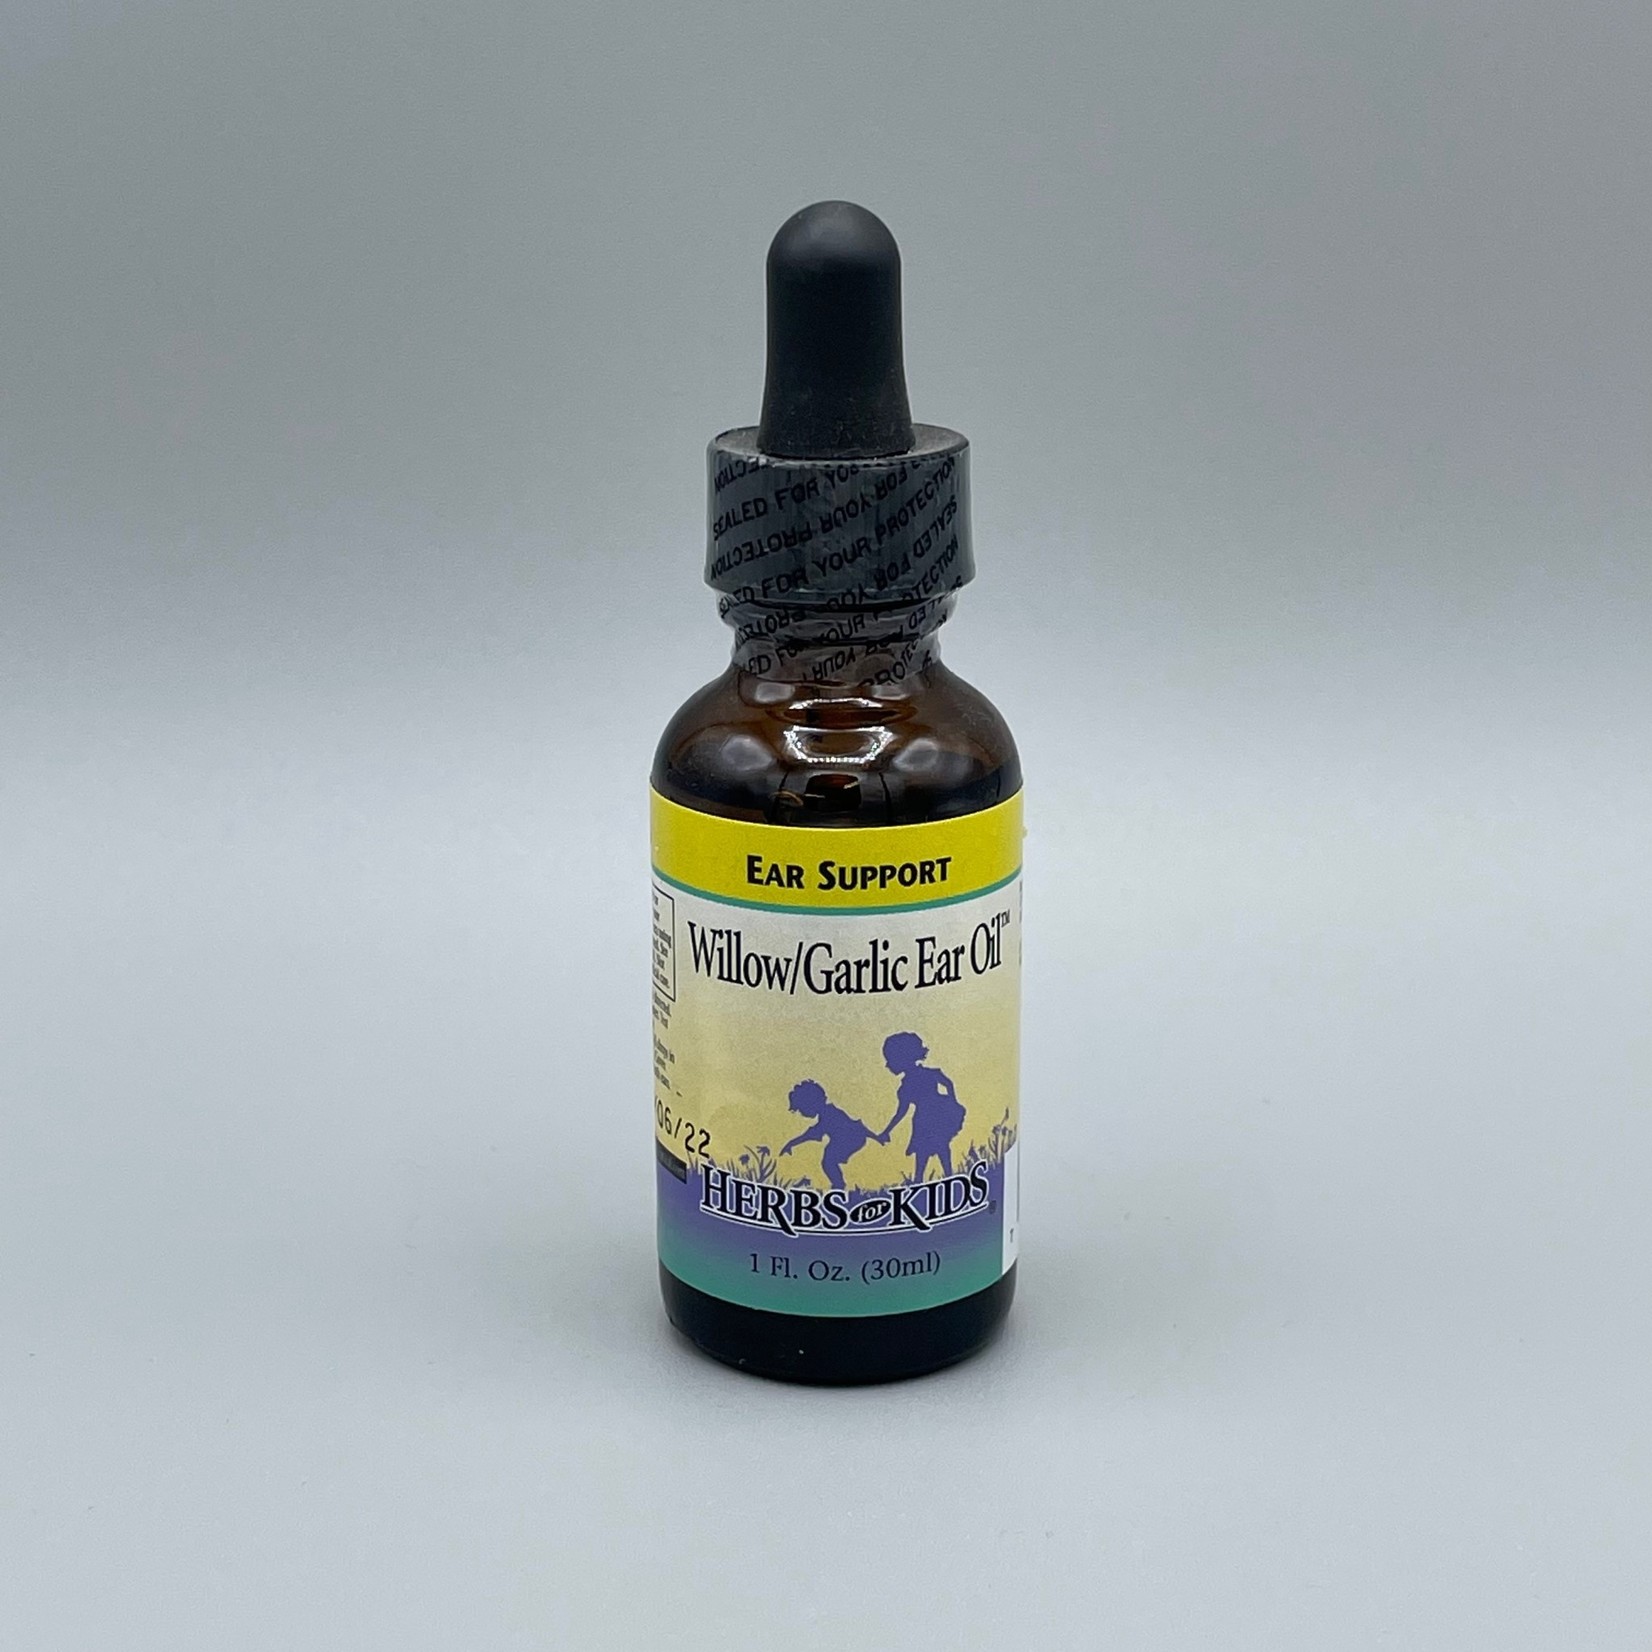 Herbs For Kids Willow/Garlic Ear Oil (Ear Support), 1 fl oz